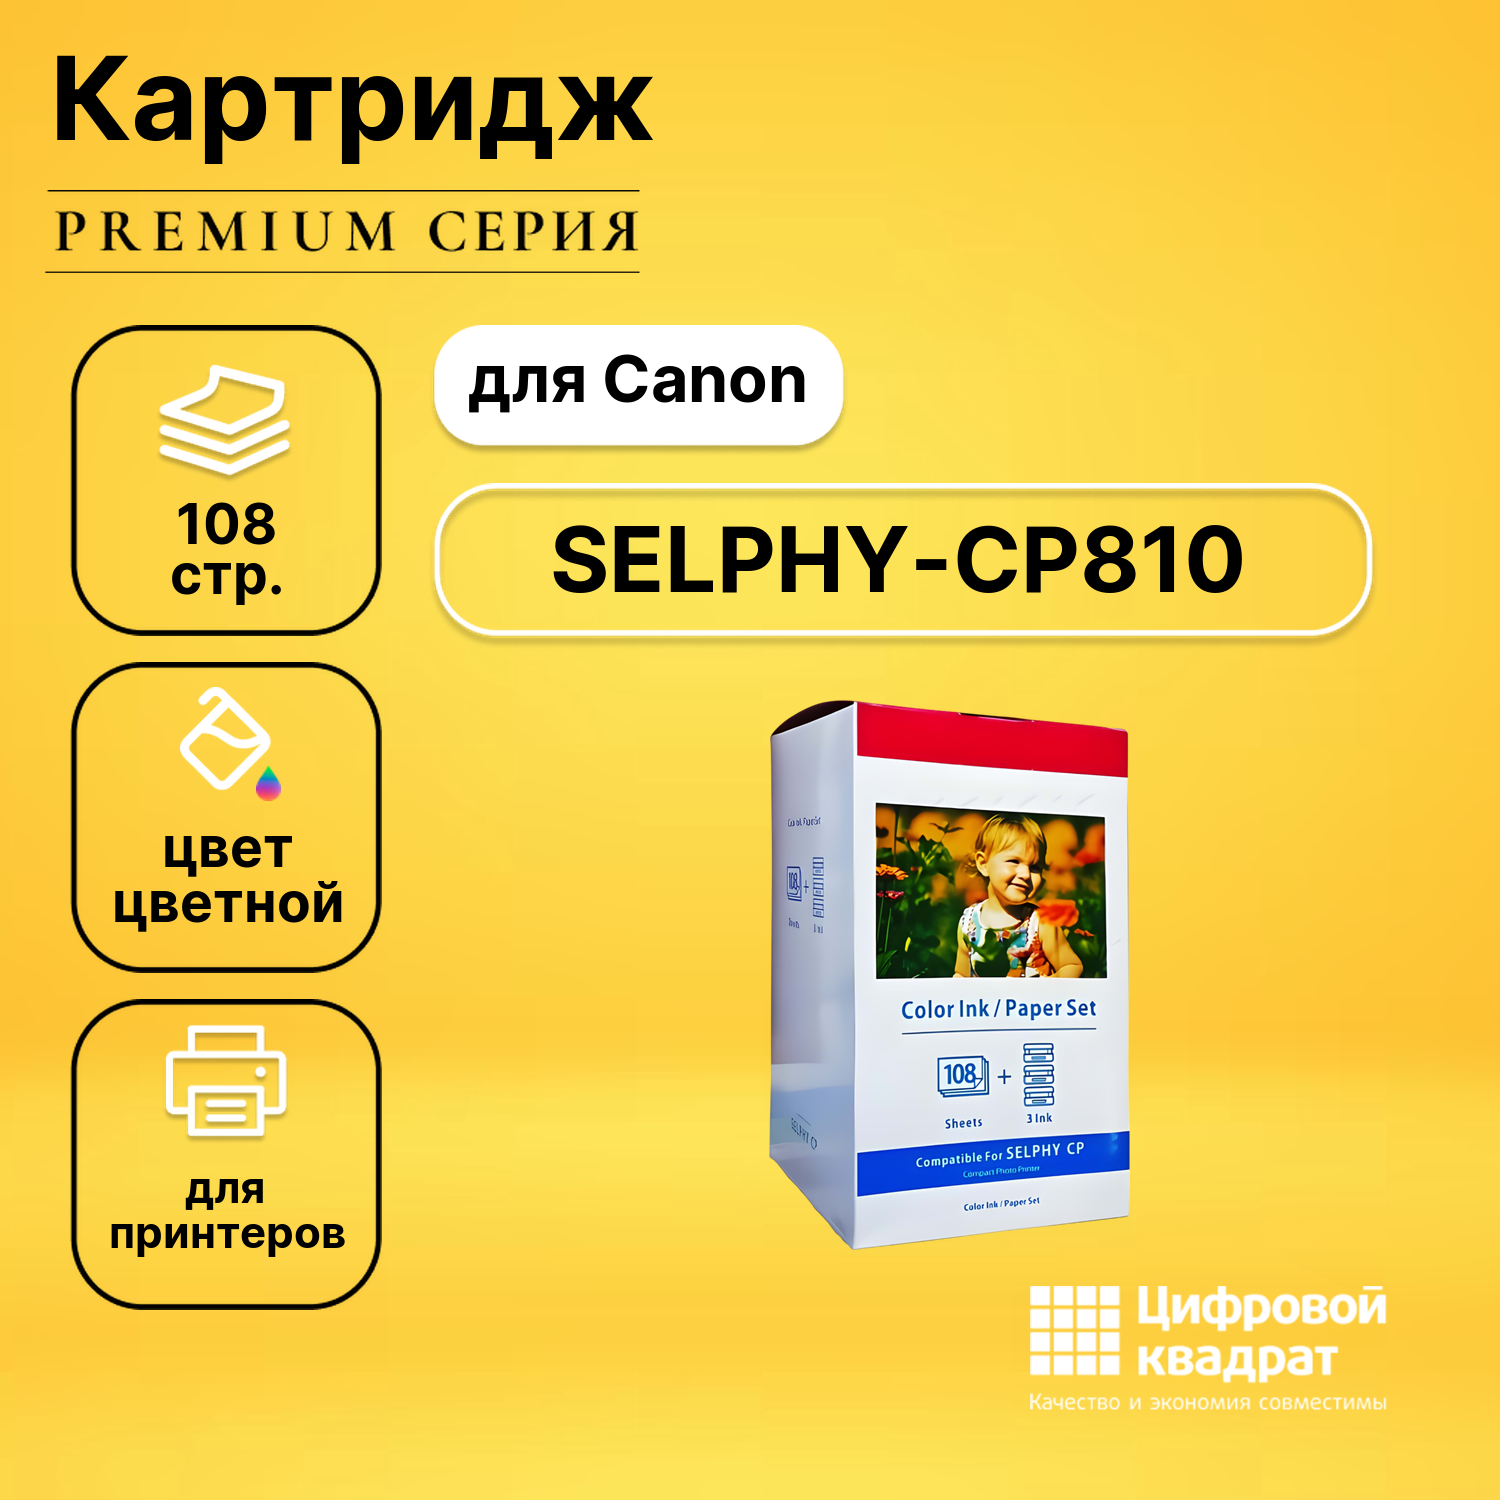 Набор для печати SELPHY-CP810